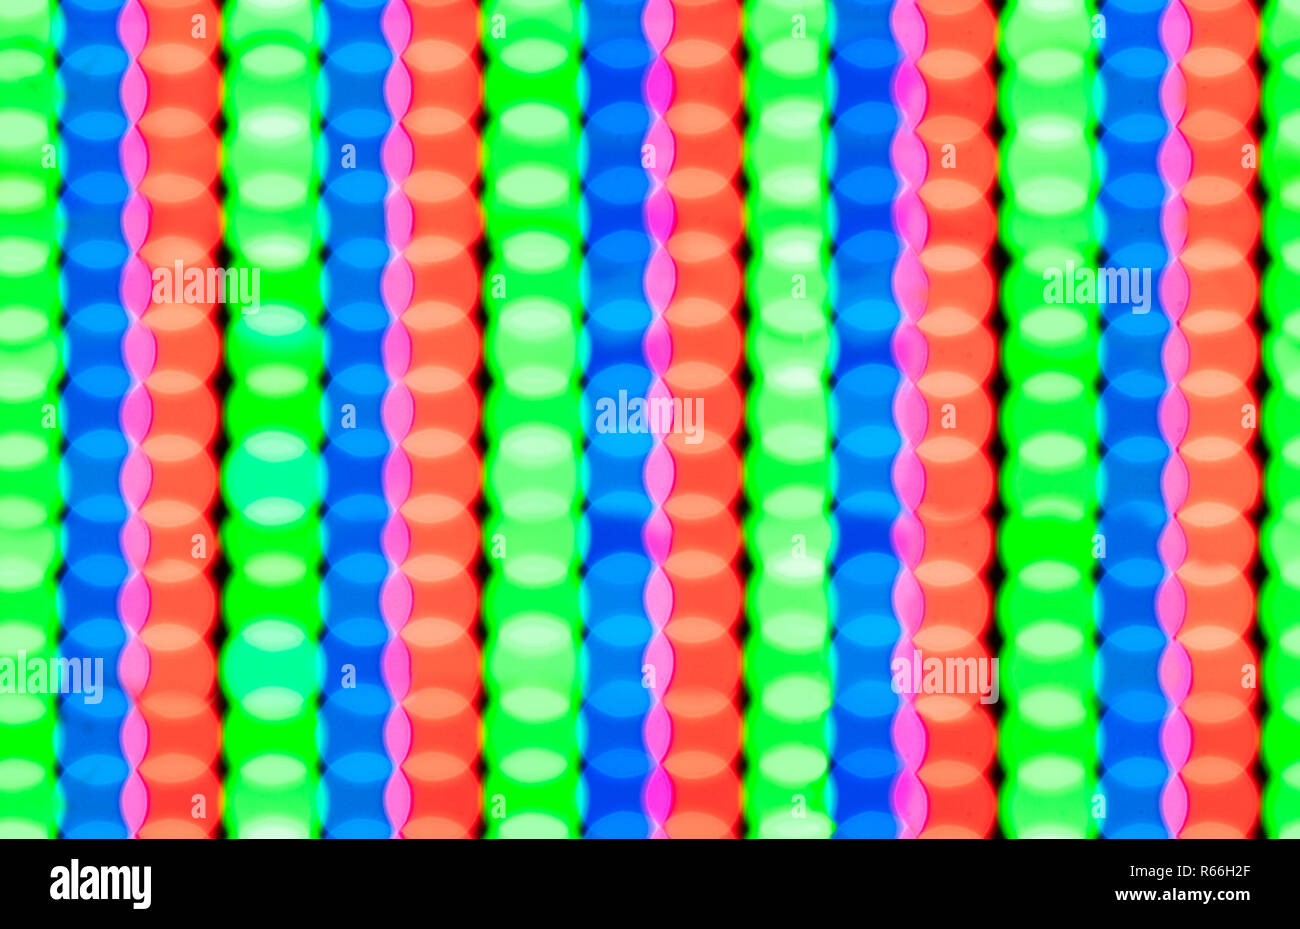 Seamless endless pattern of RGB led diode display panel Stock Photo Alamy